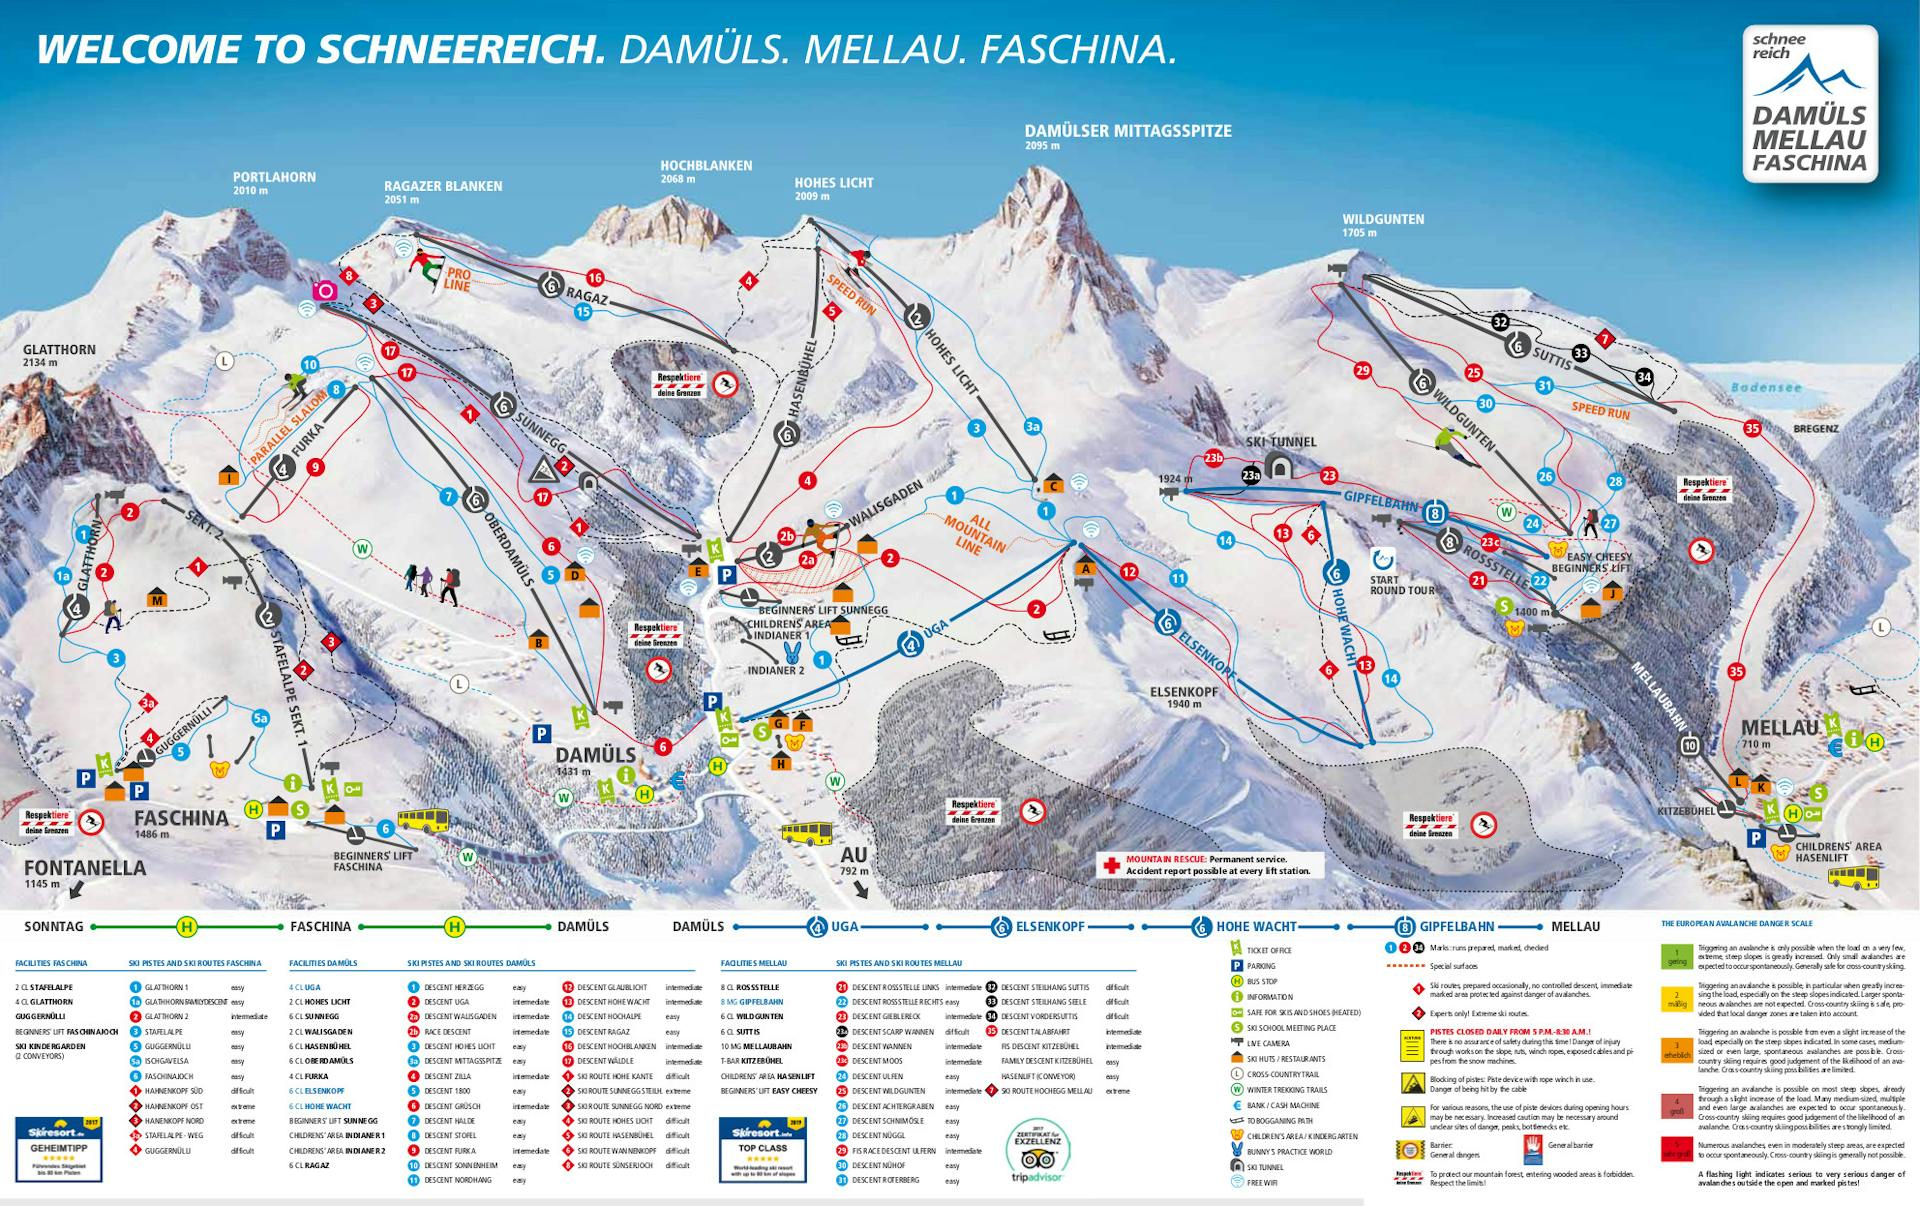 Damuls ski map